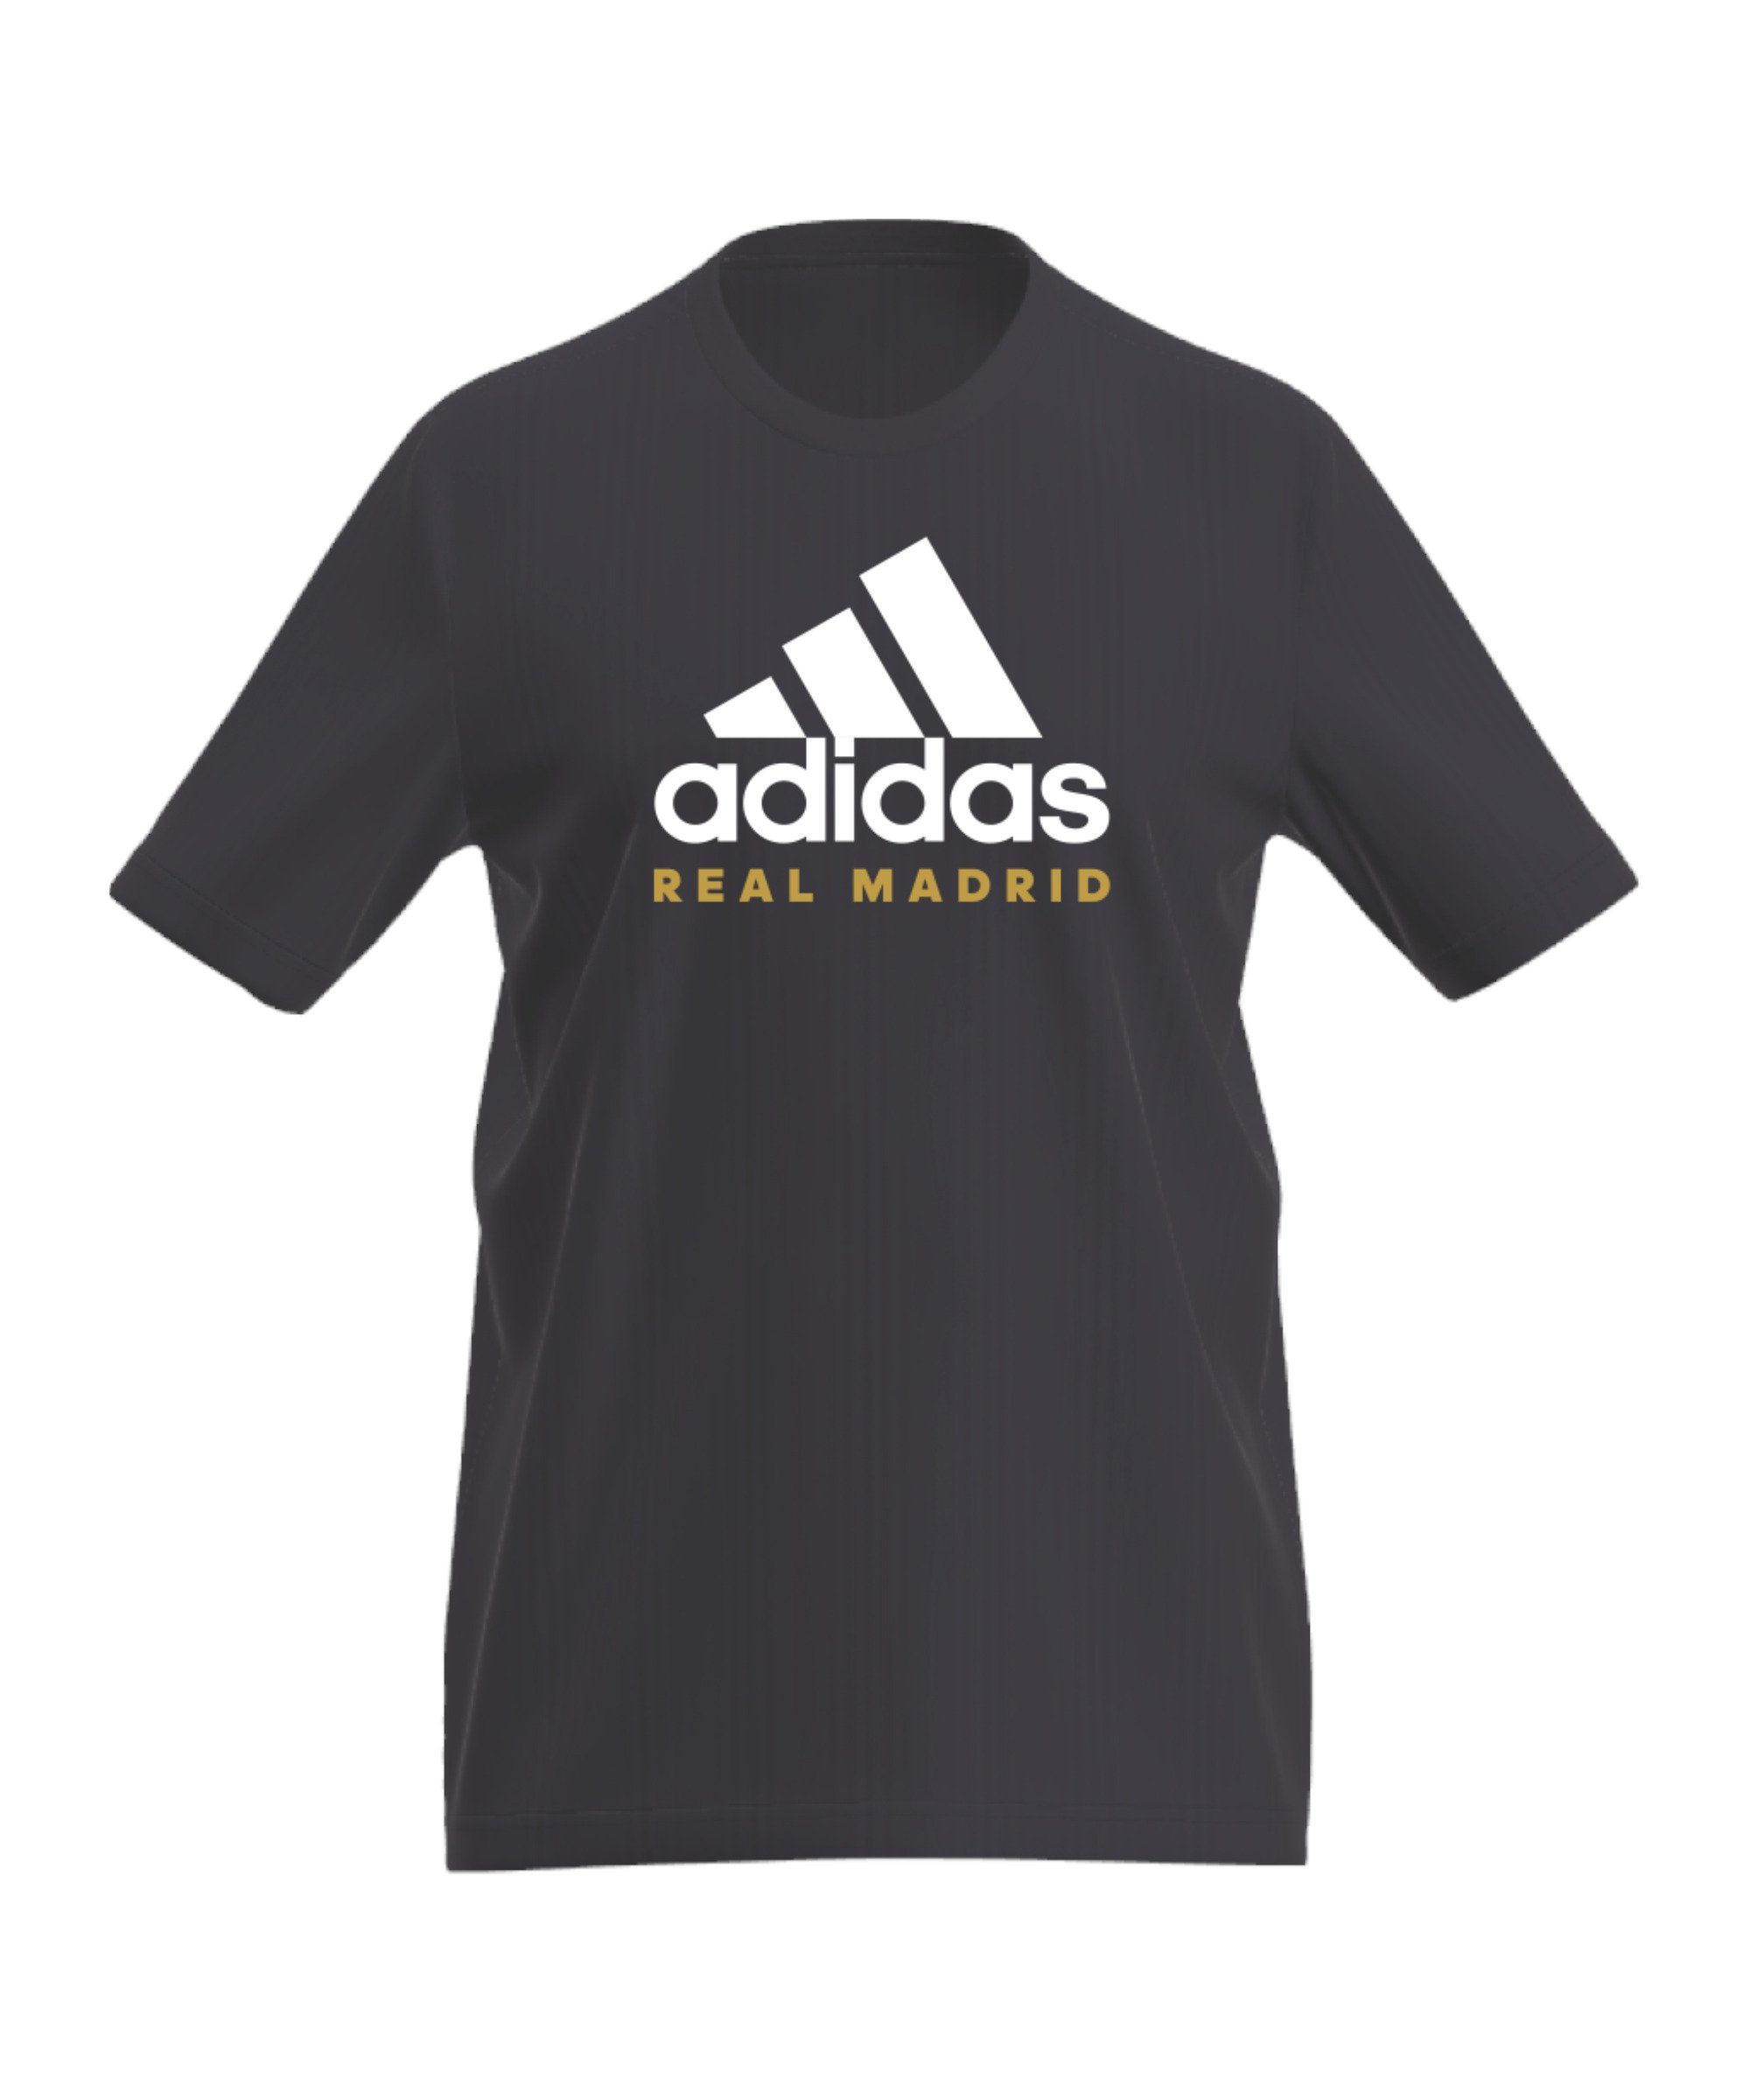 adidas Performance T-Shirt Real Madrid Graphic T-Shirt default